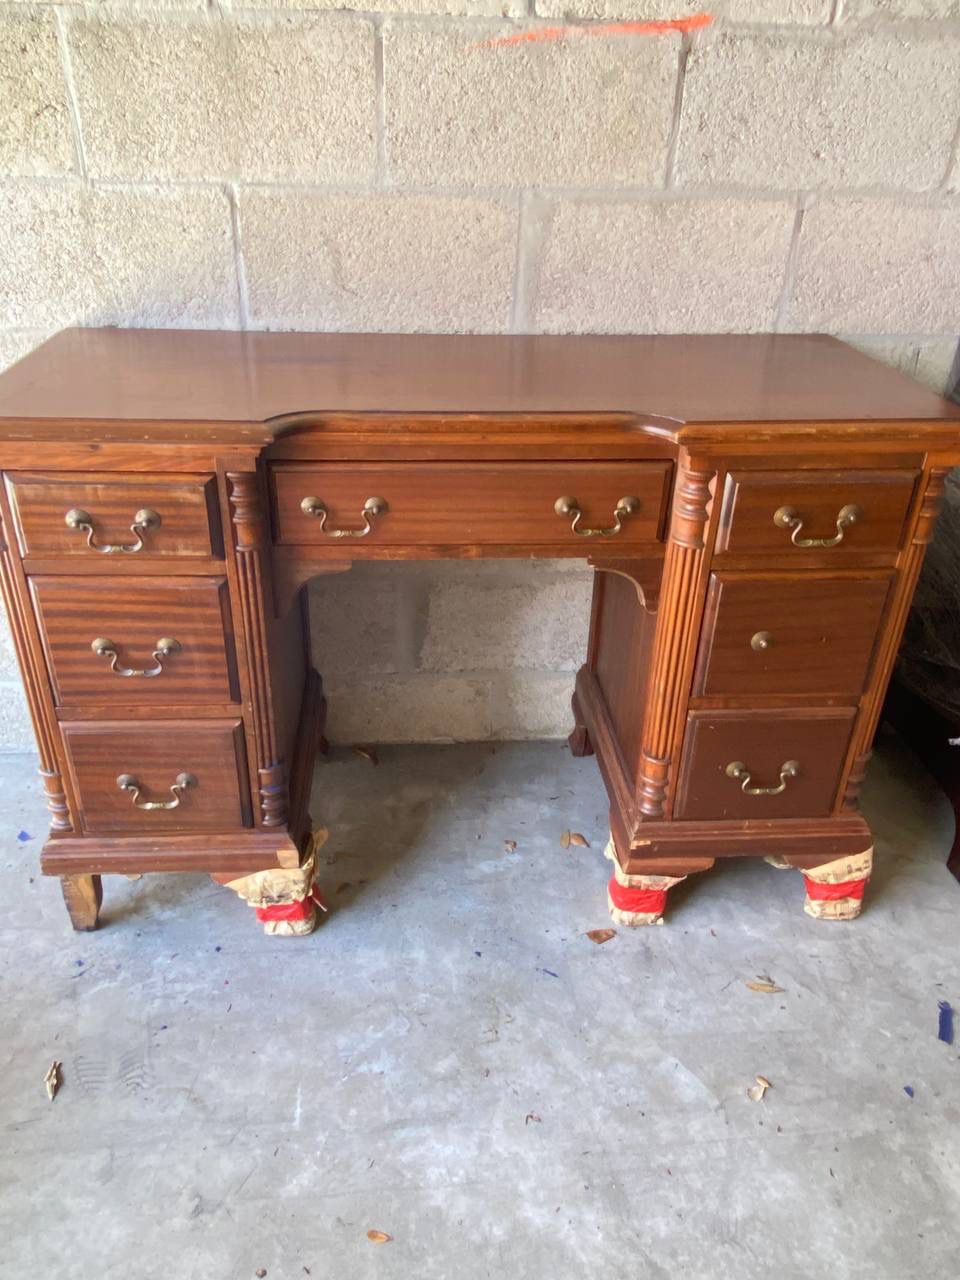 Antique Wood Desk, 7 drawers, my Grandmothers desk